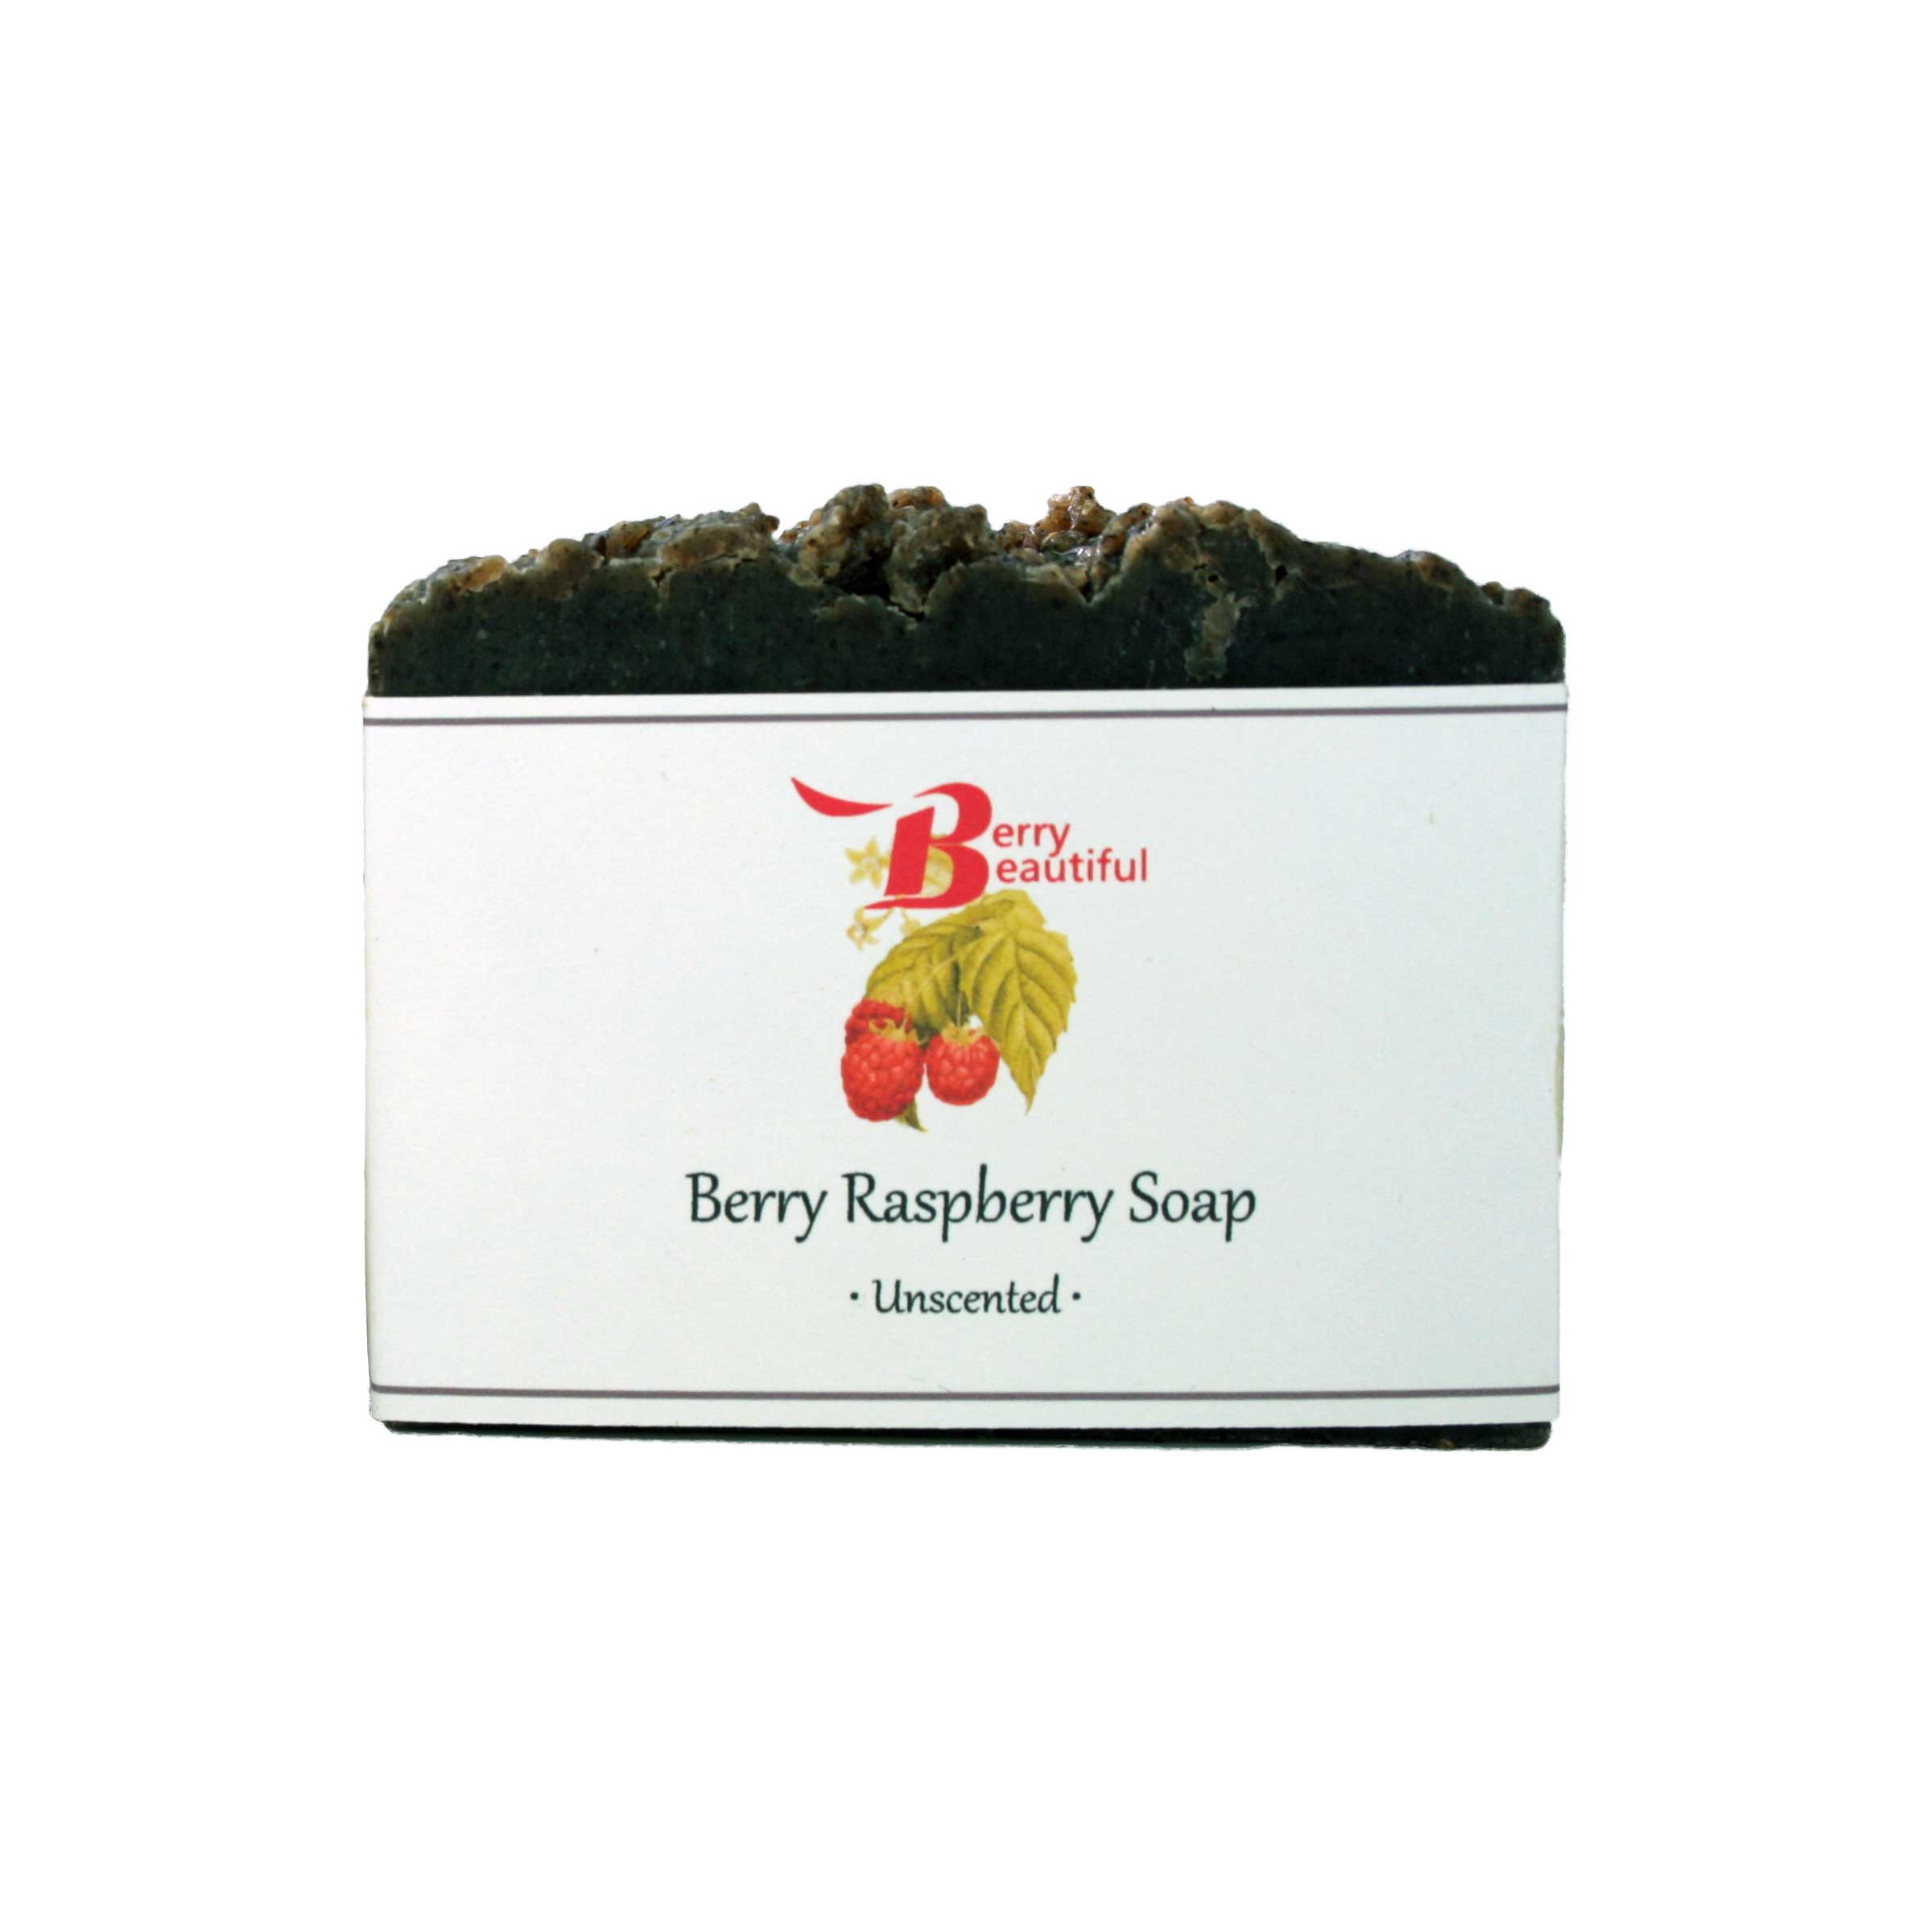 Berry Raspberry Soap